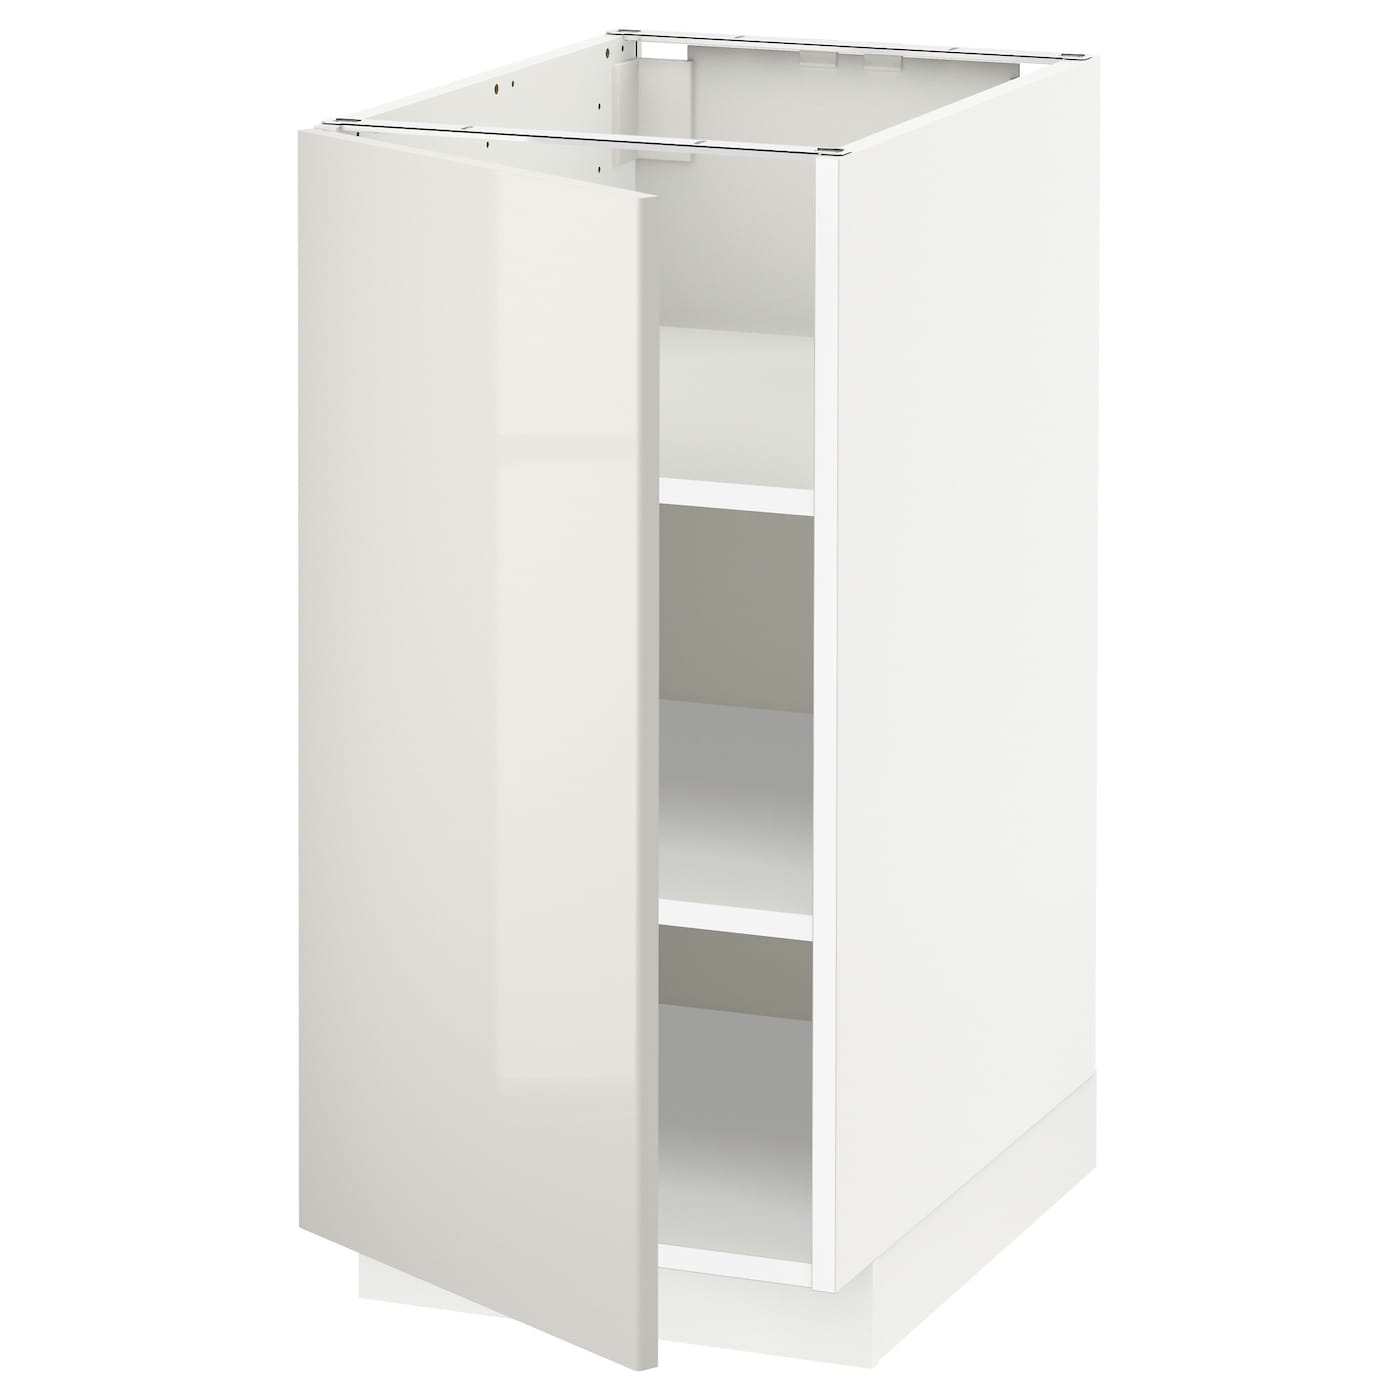 Напольный шкаф - METOD IKEA/ МЕТОД ИКЕА,  88х40 см, белый